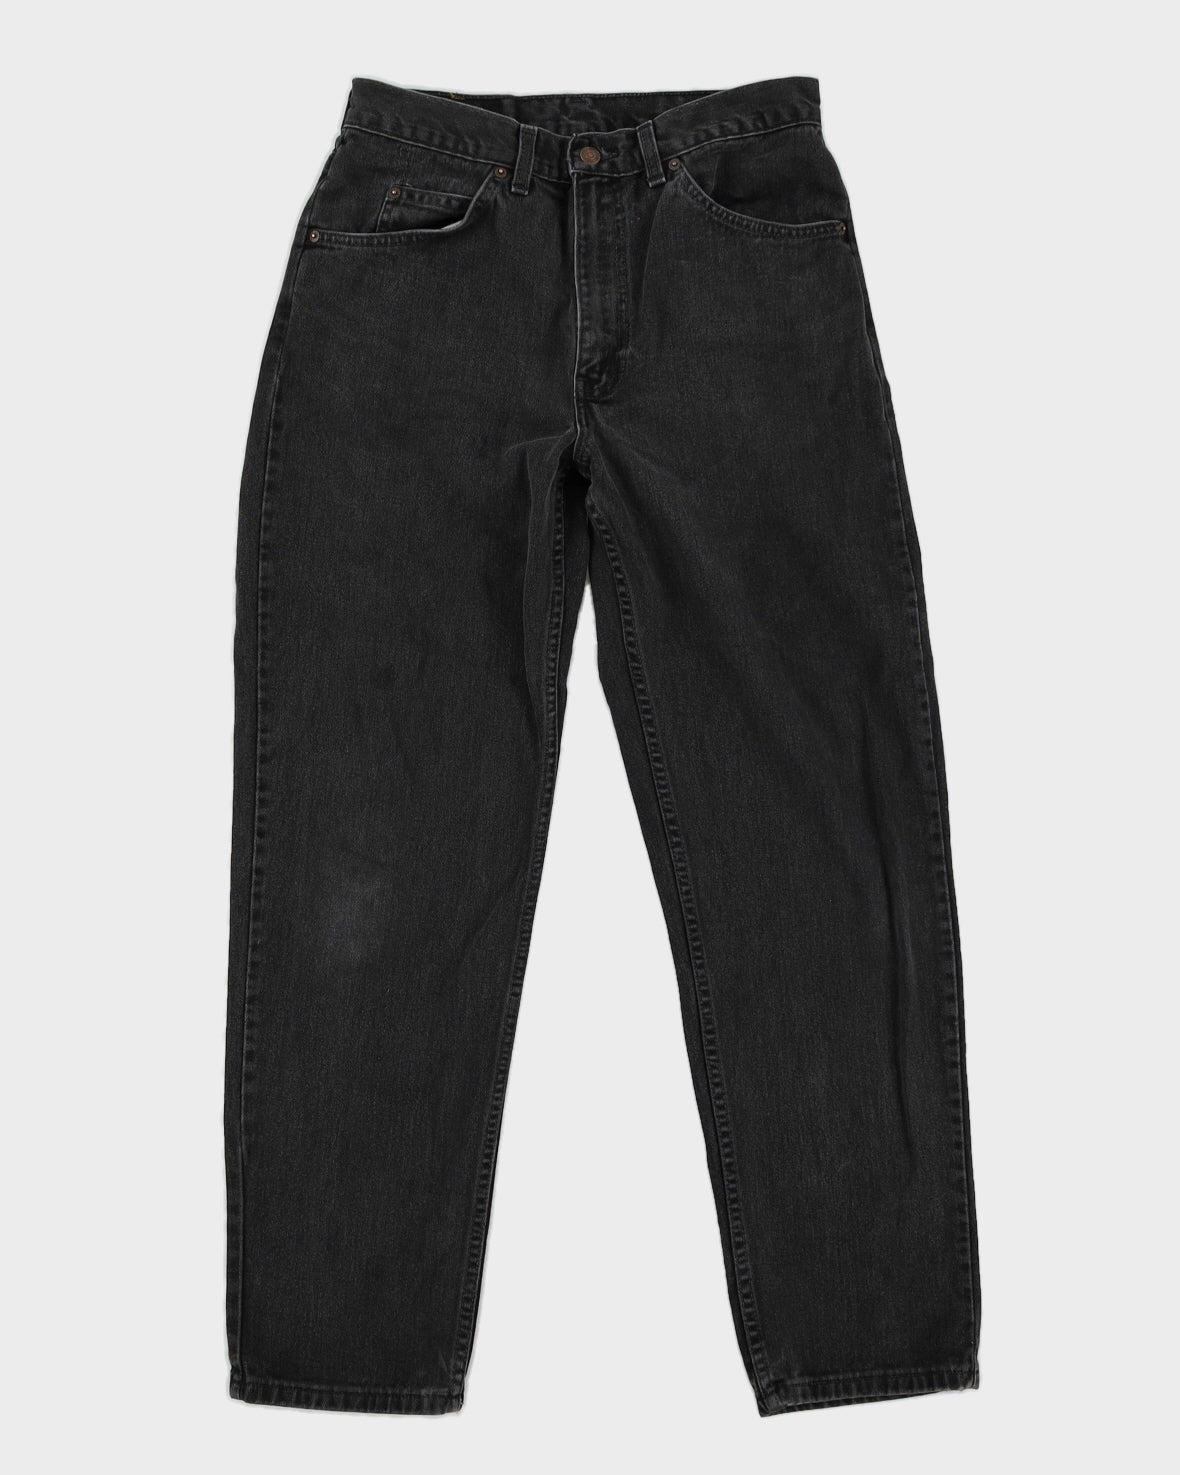 Vintage 80s Levi's Orange Tab Black Medium Washed Jeans - W33 L31